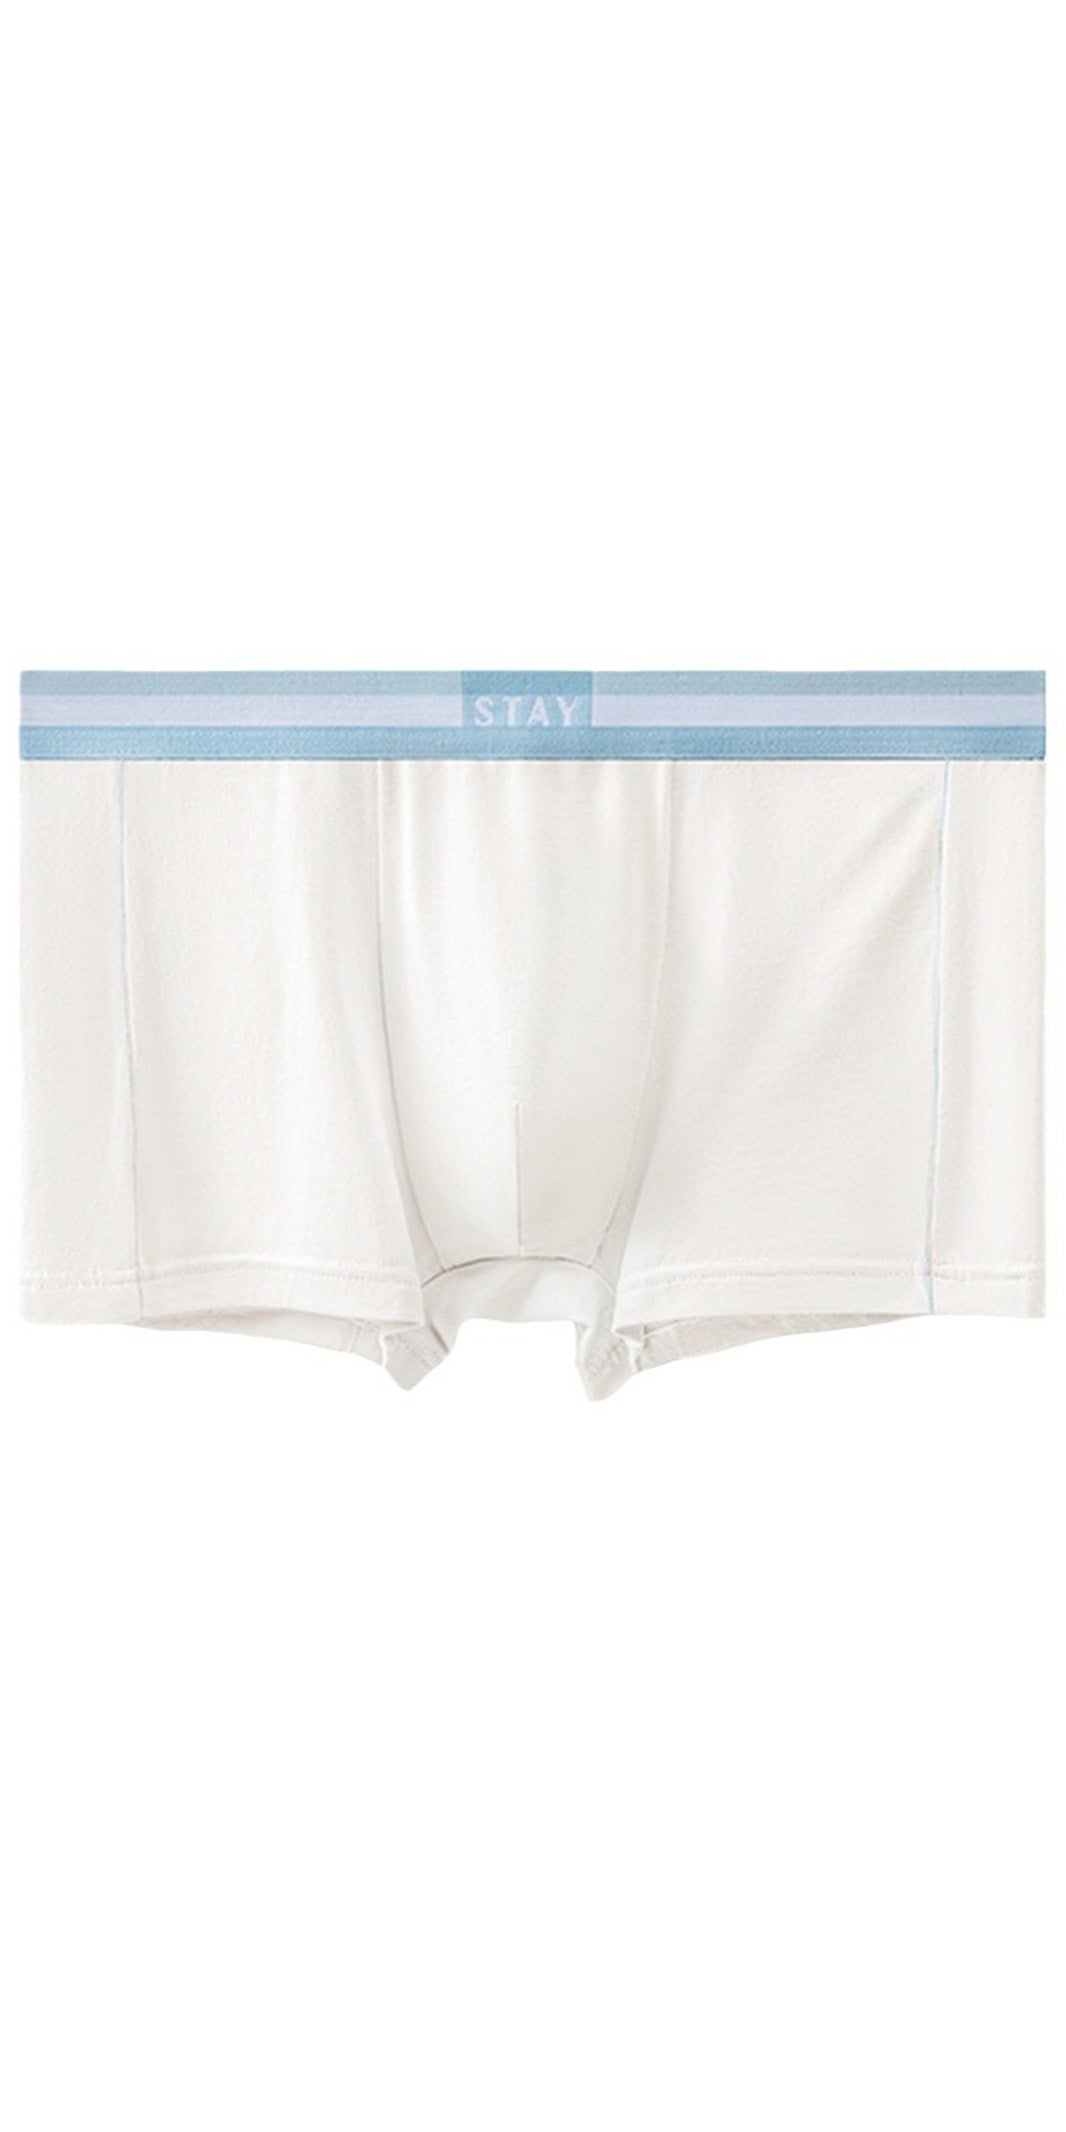 Men's Underwear Cotton Antibacterial Crotch Shorts Sports Breathable Boxer Panties